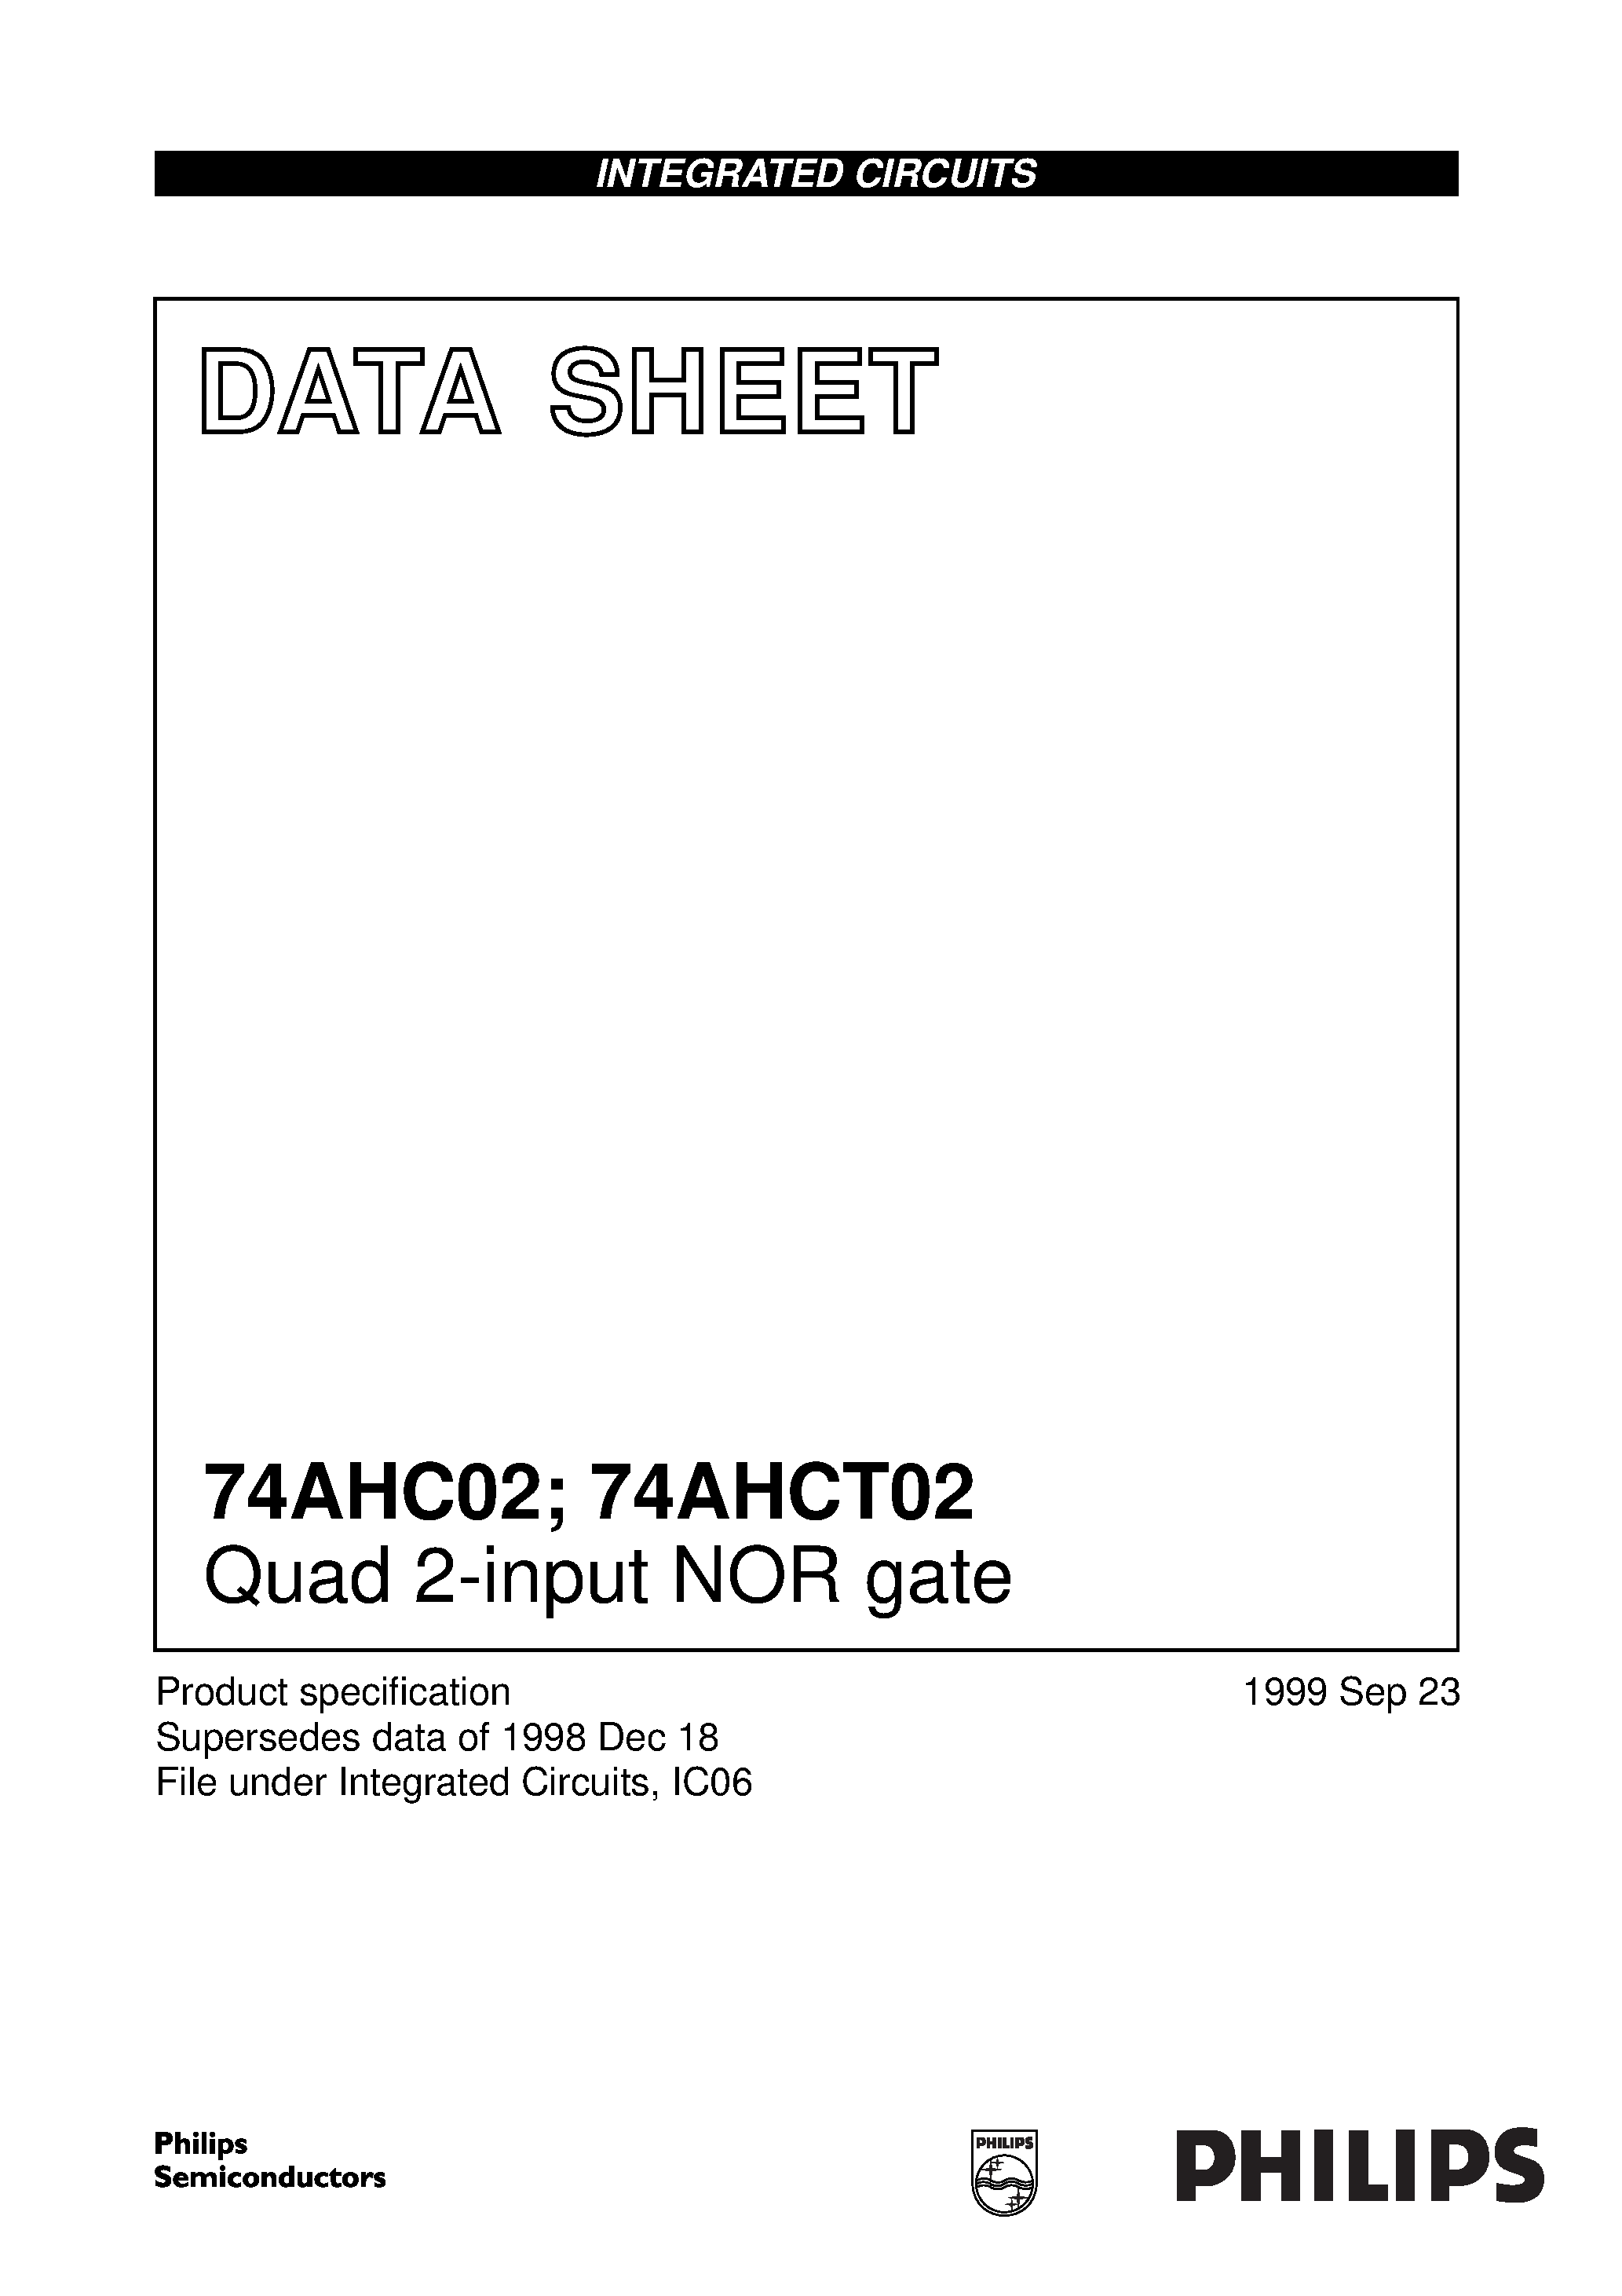 Datasheet 74AHC02PWDH - Quad 2-input NOR gate page 1